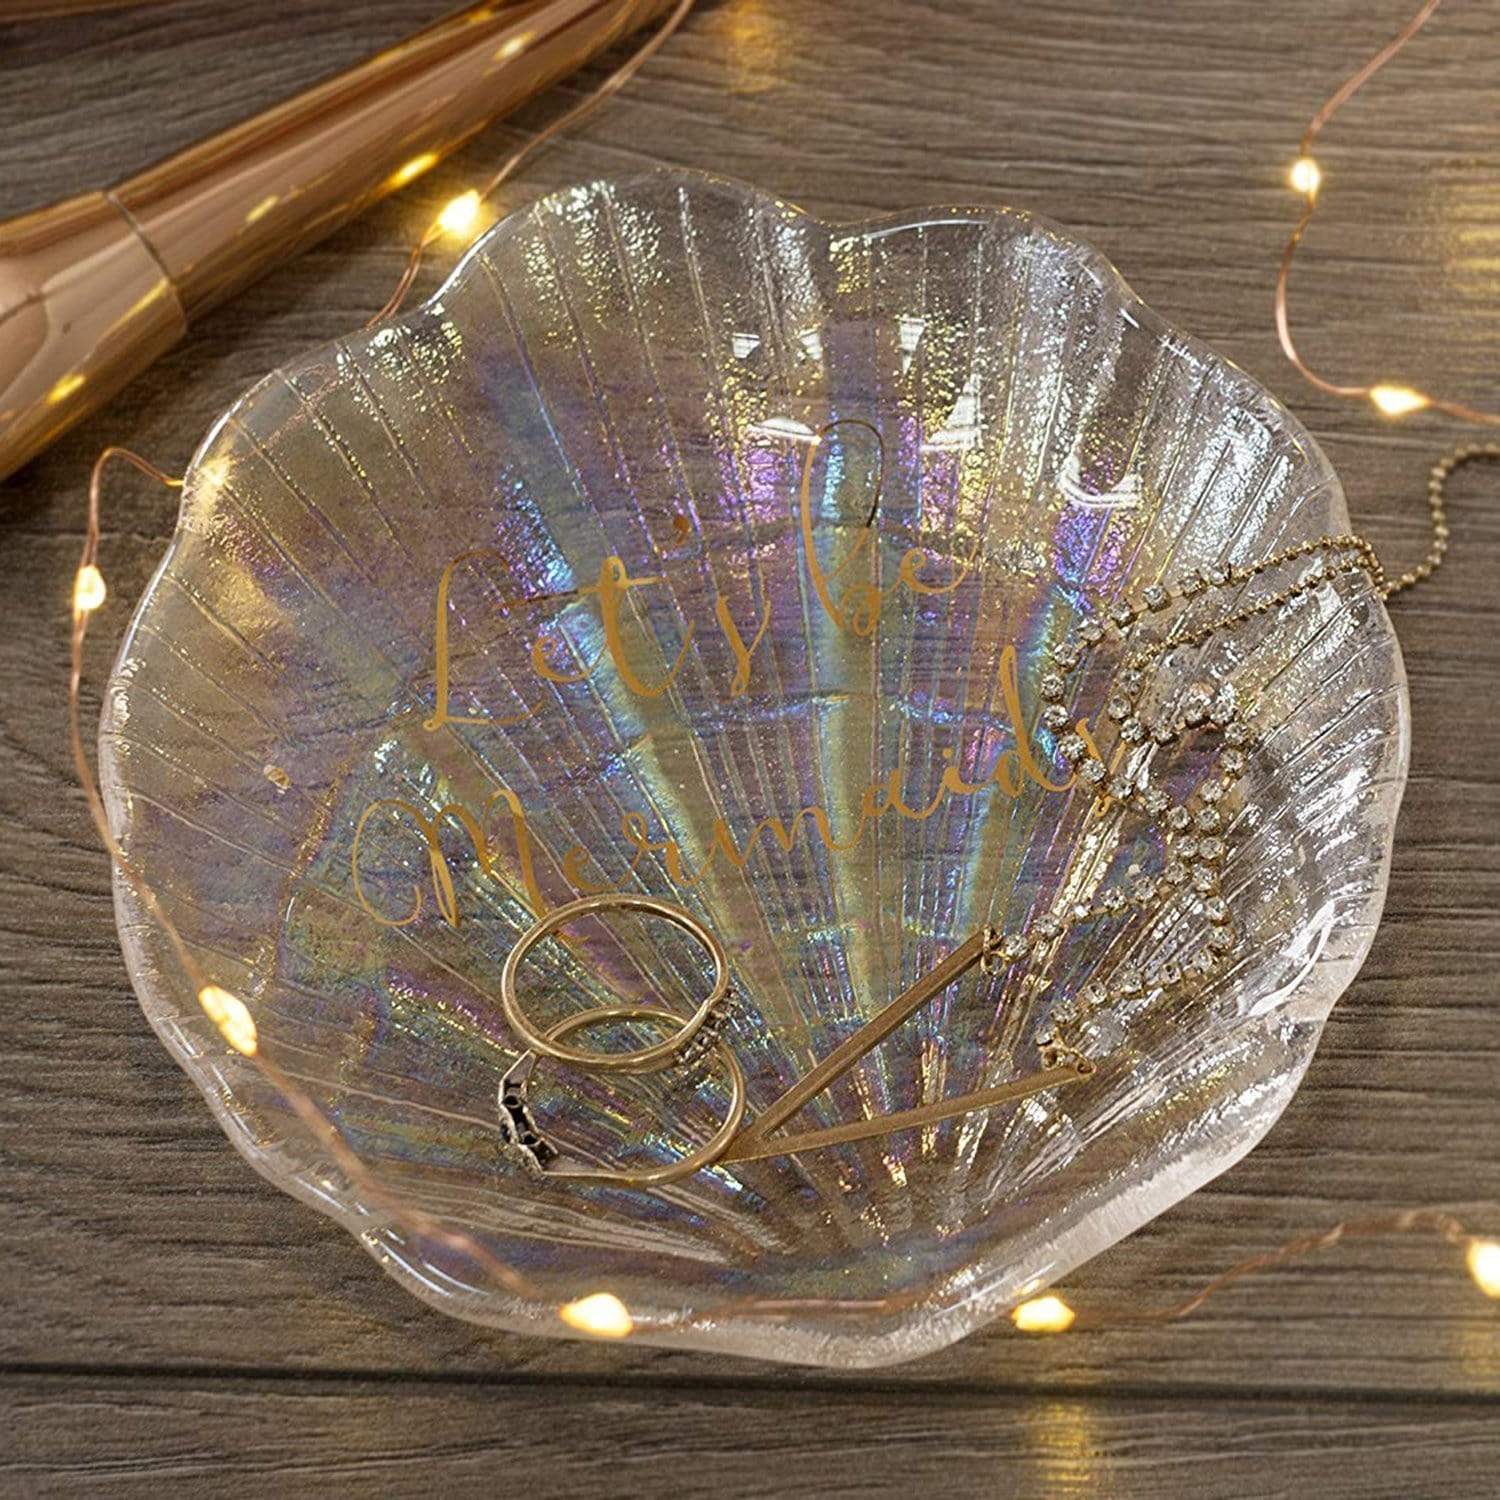 Creative Tops Ava & I Let's Be Mermaids Glass Shell Trinket Dish - 5213693 - Jashanmal Home